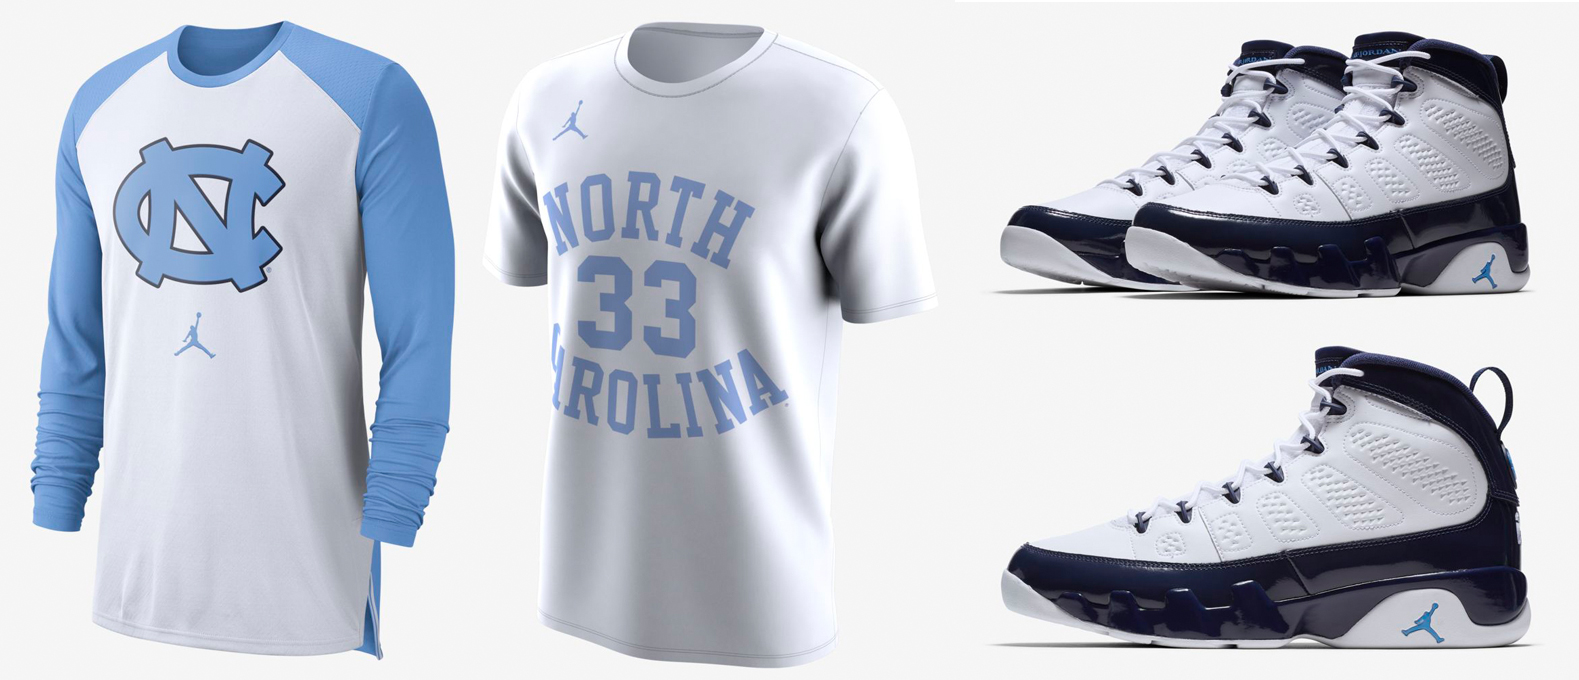 Air Jordan 9 UNC North Carolina Shirts 